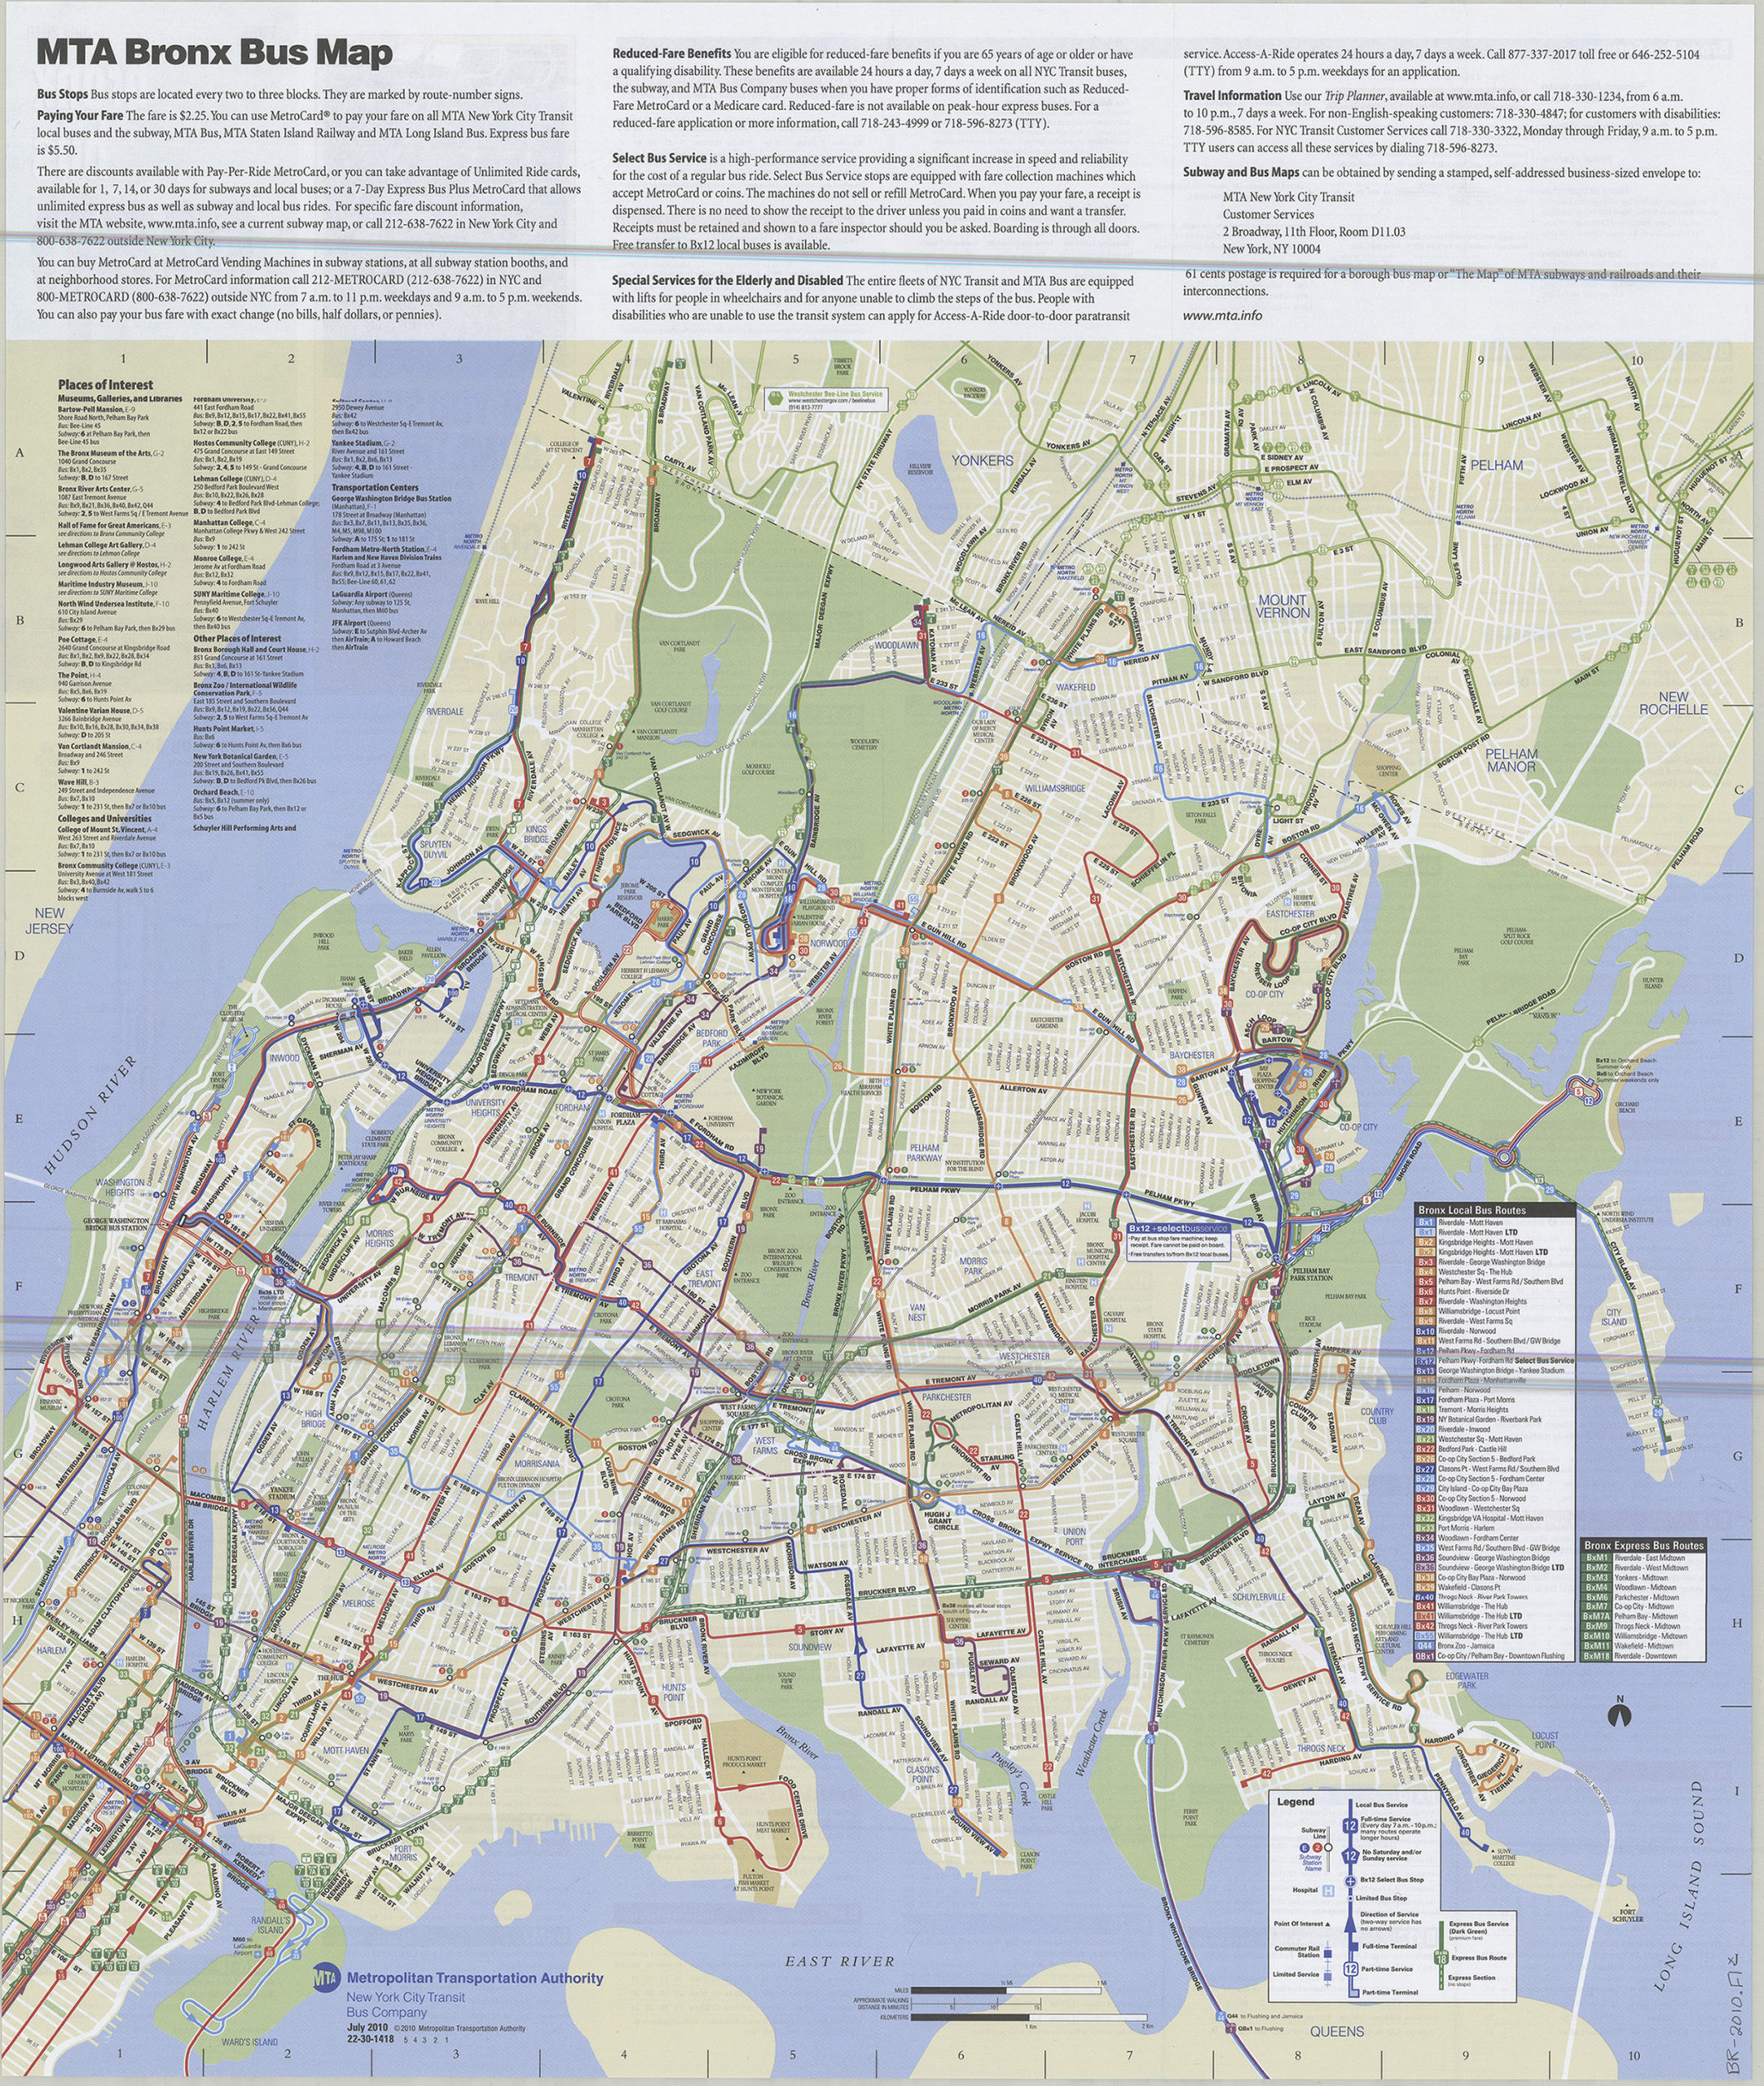 Bronx bus map: July 2010: MTA Metropolitan Transportation Authority